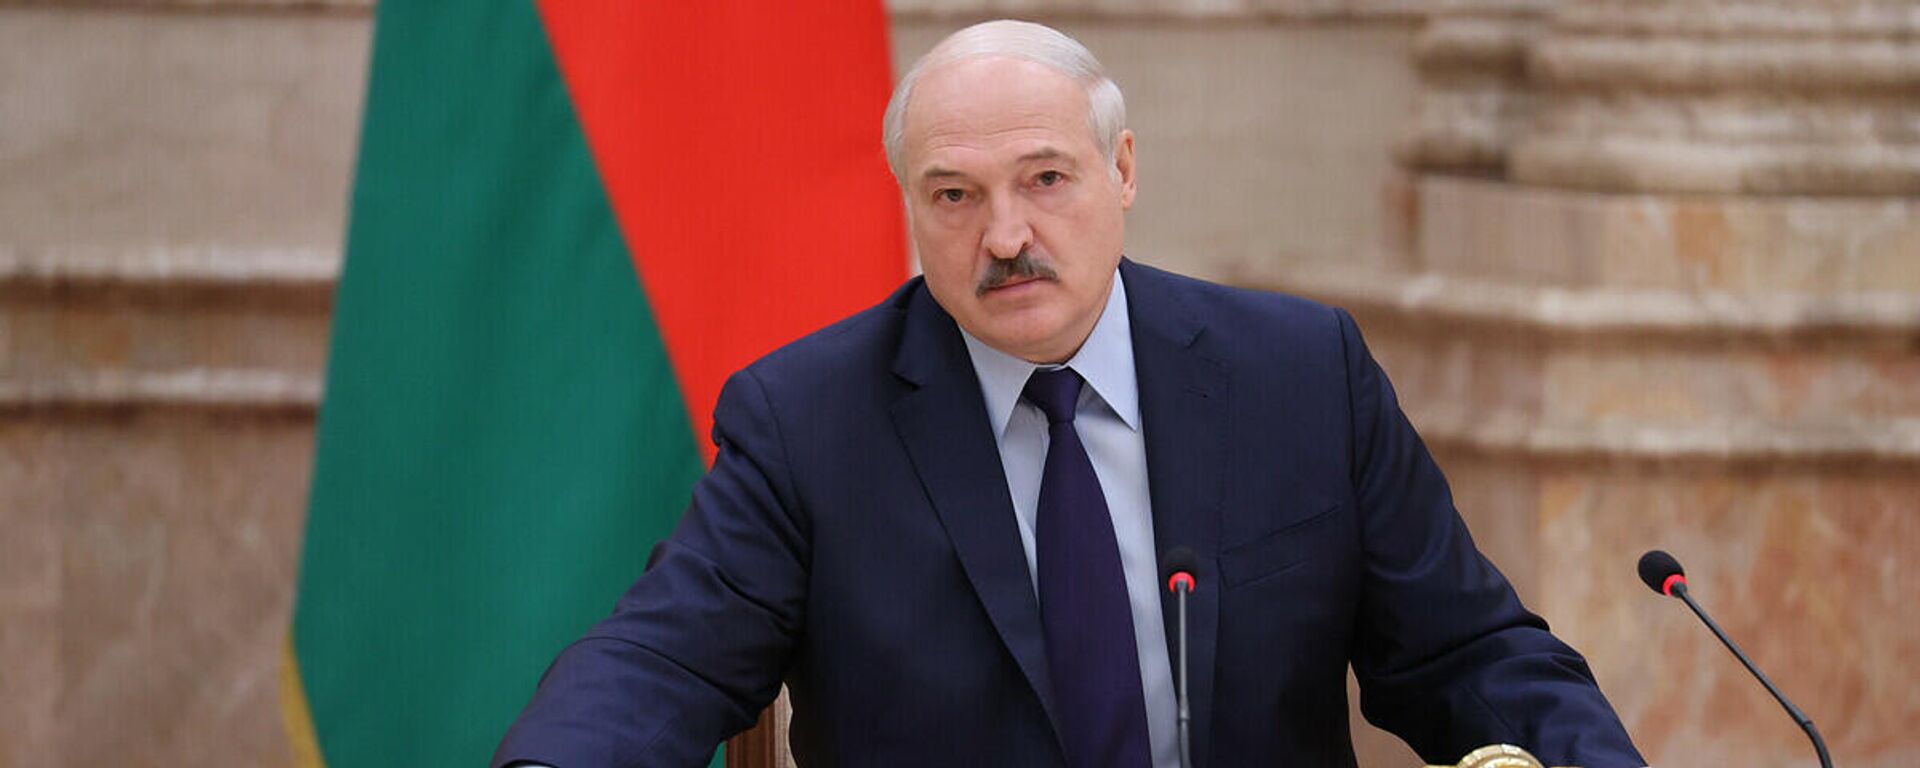 Президент Беларуси Александр Лукашенко - Sputnik Беларусь, 1920, 01.10.2021